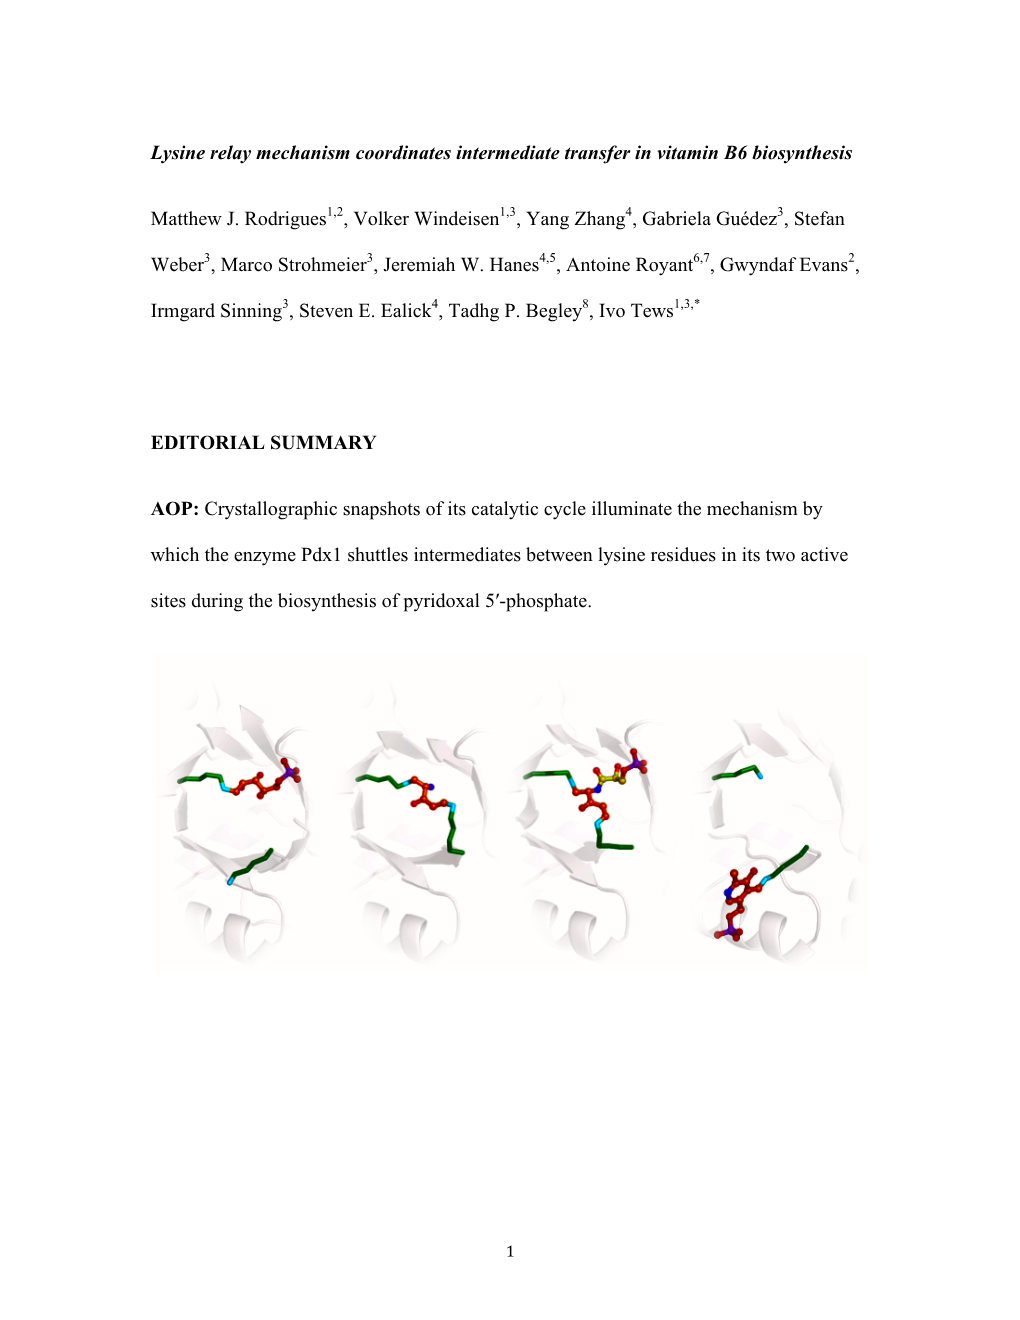 Lysine Relay Mechanism Coordinates Intermediate Transfer in Vitamin B6 Biosynthesis